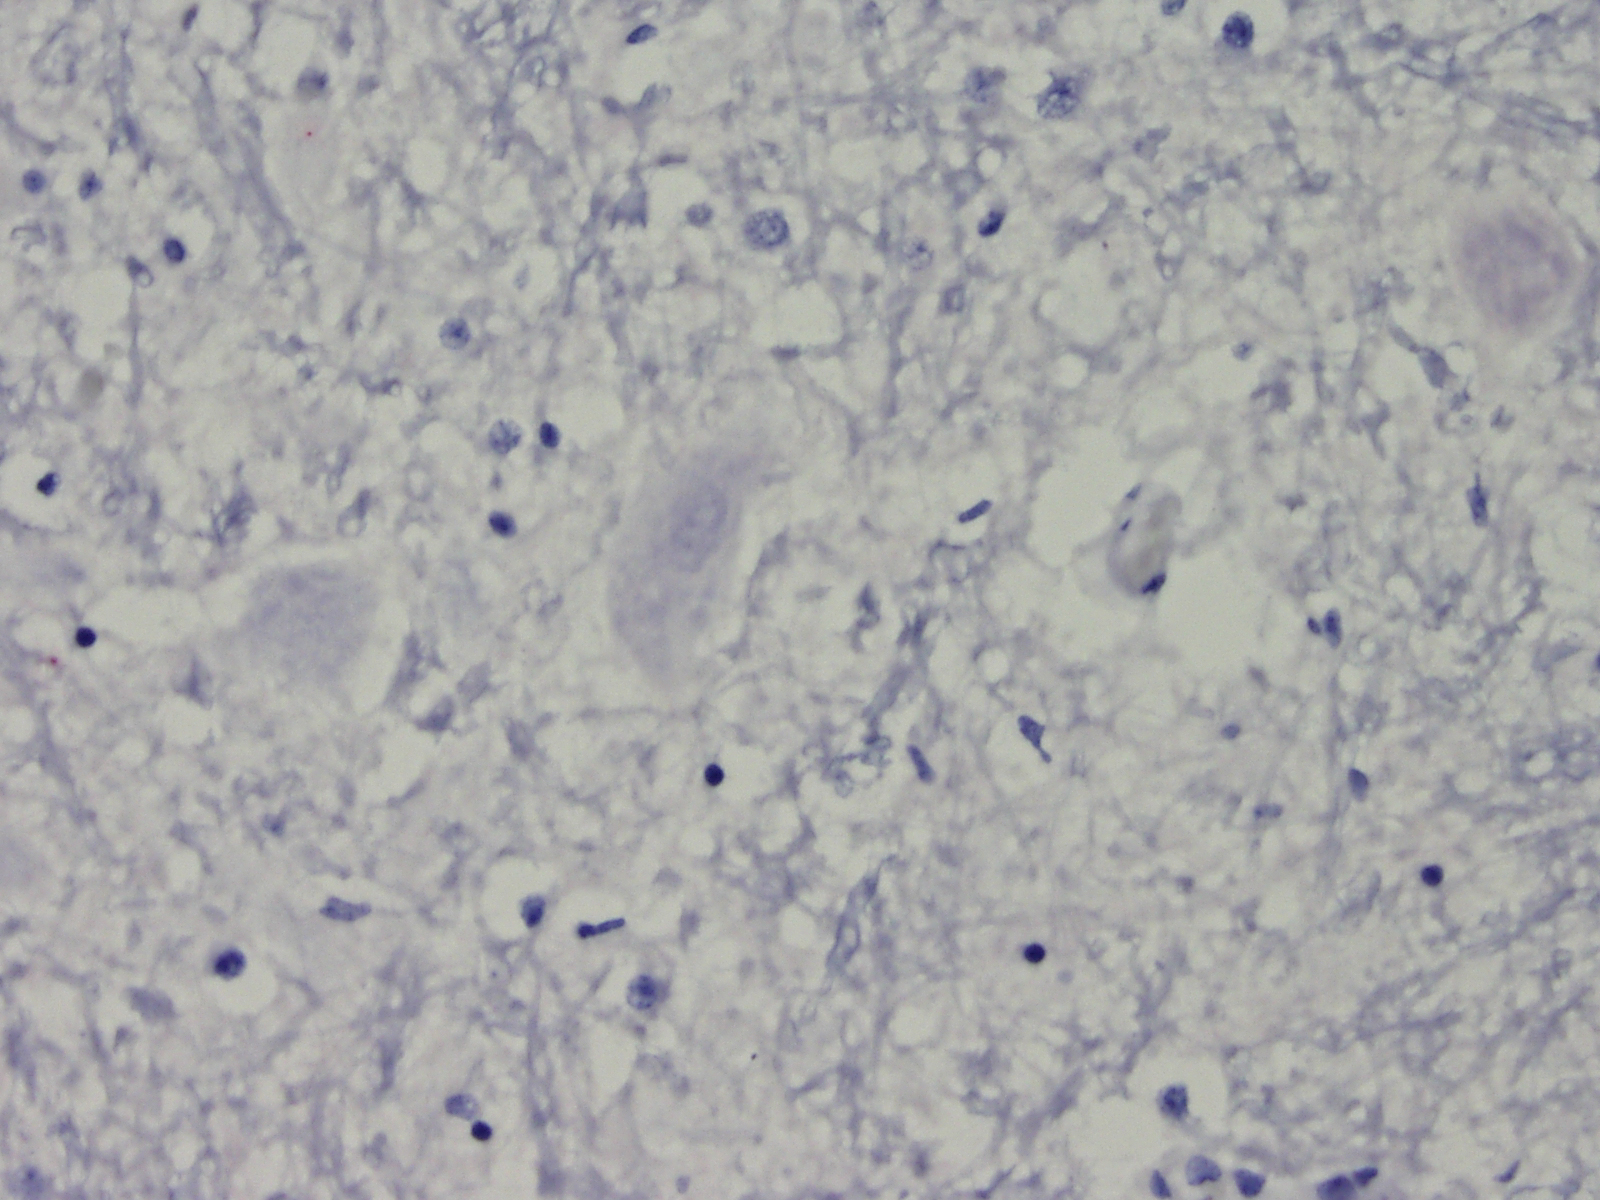 Histo slide of negative neuron test result